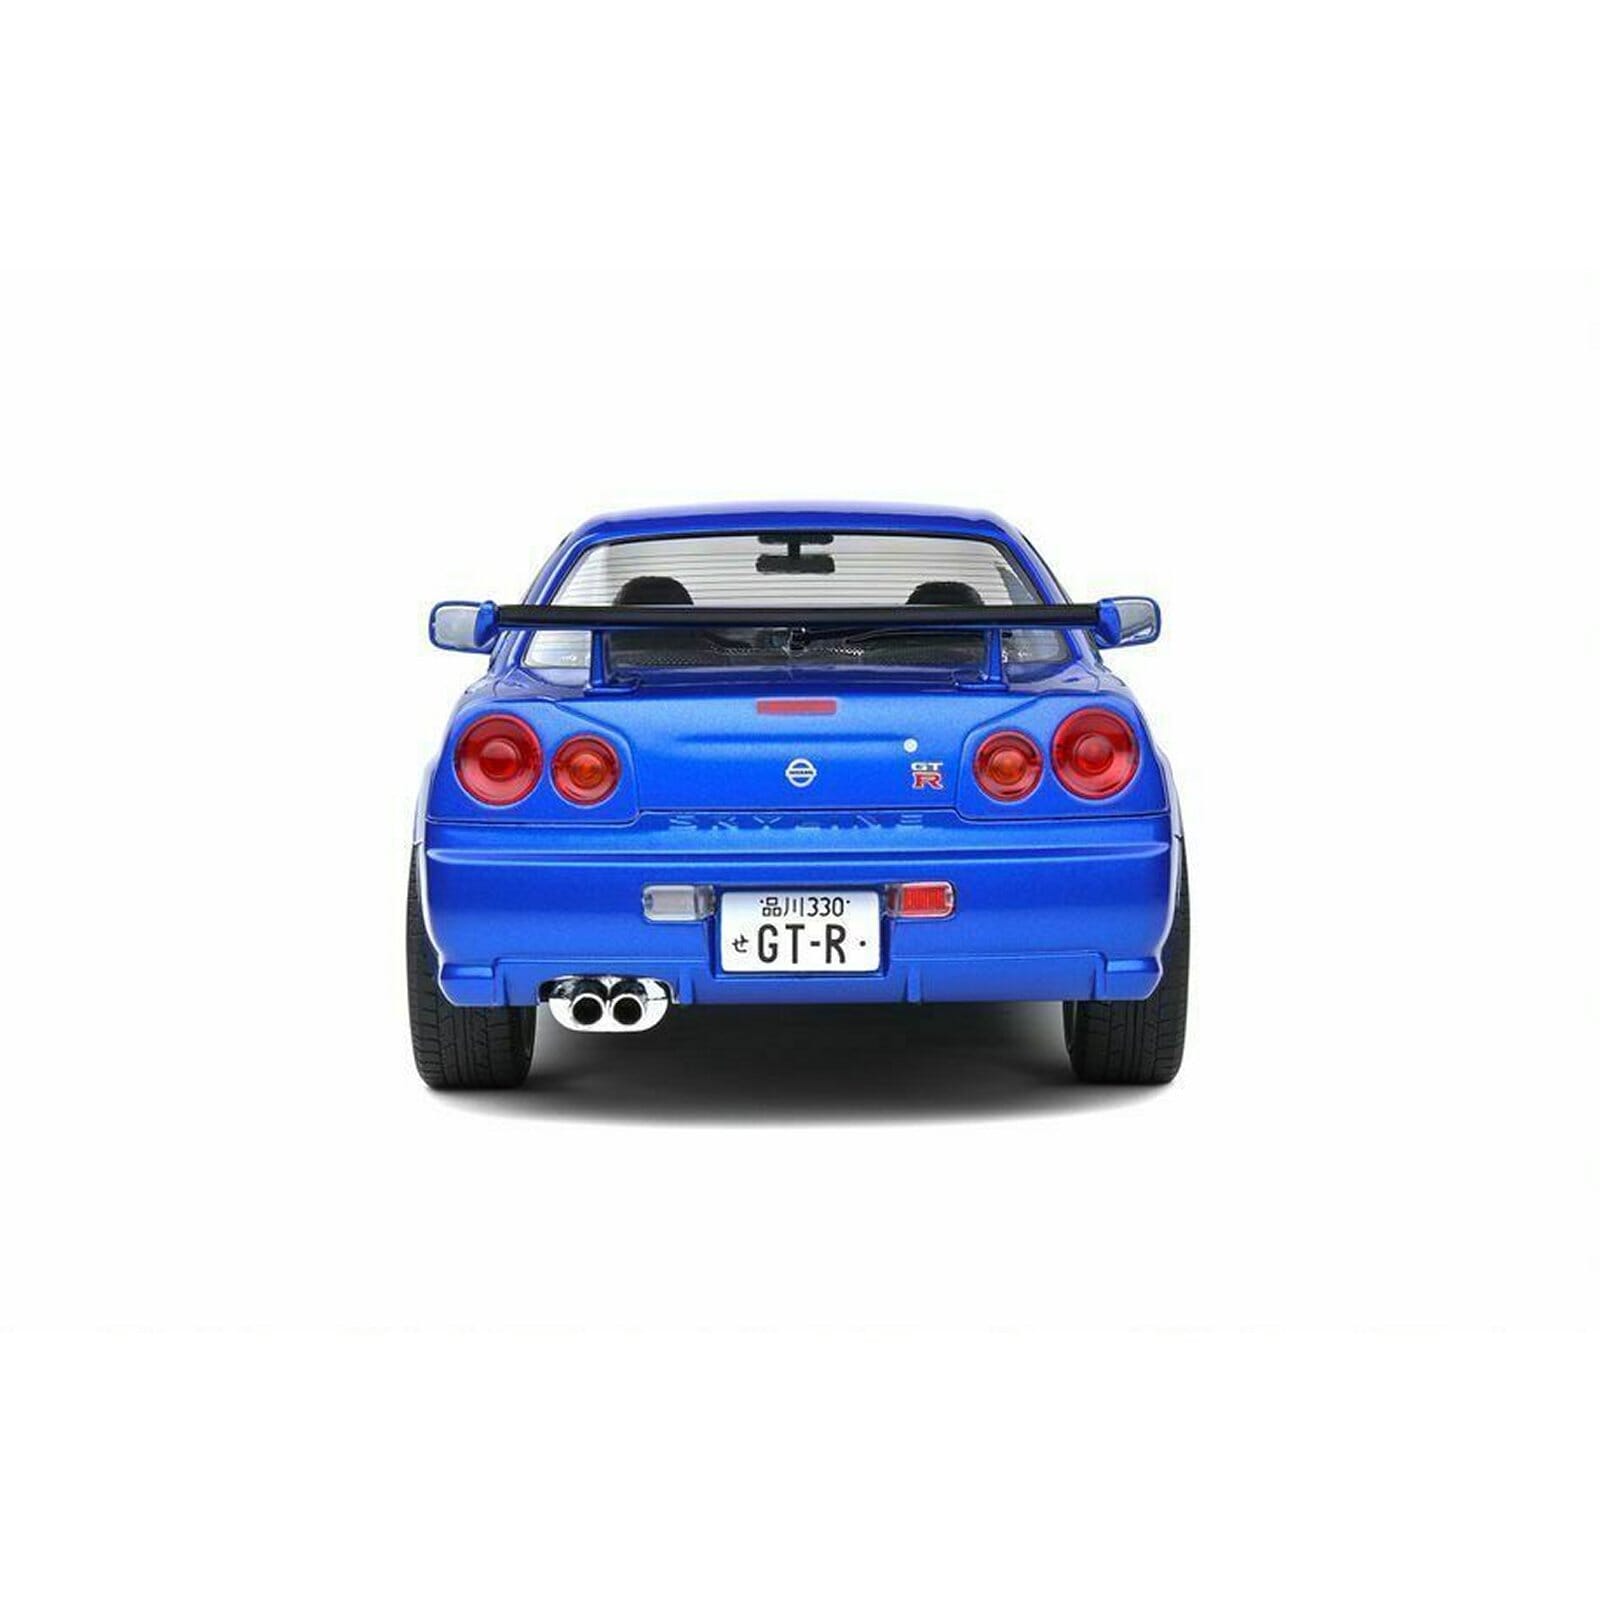 Nissan Skyline GT-R Diecast Model 1:18 scale R34 Blue Solido